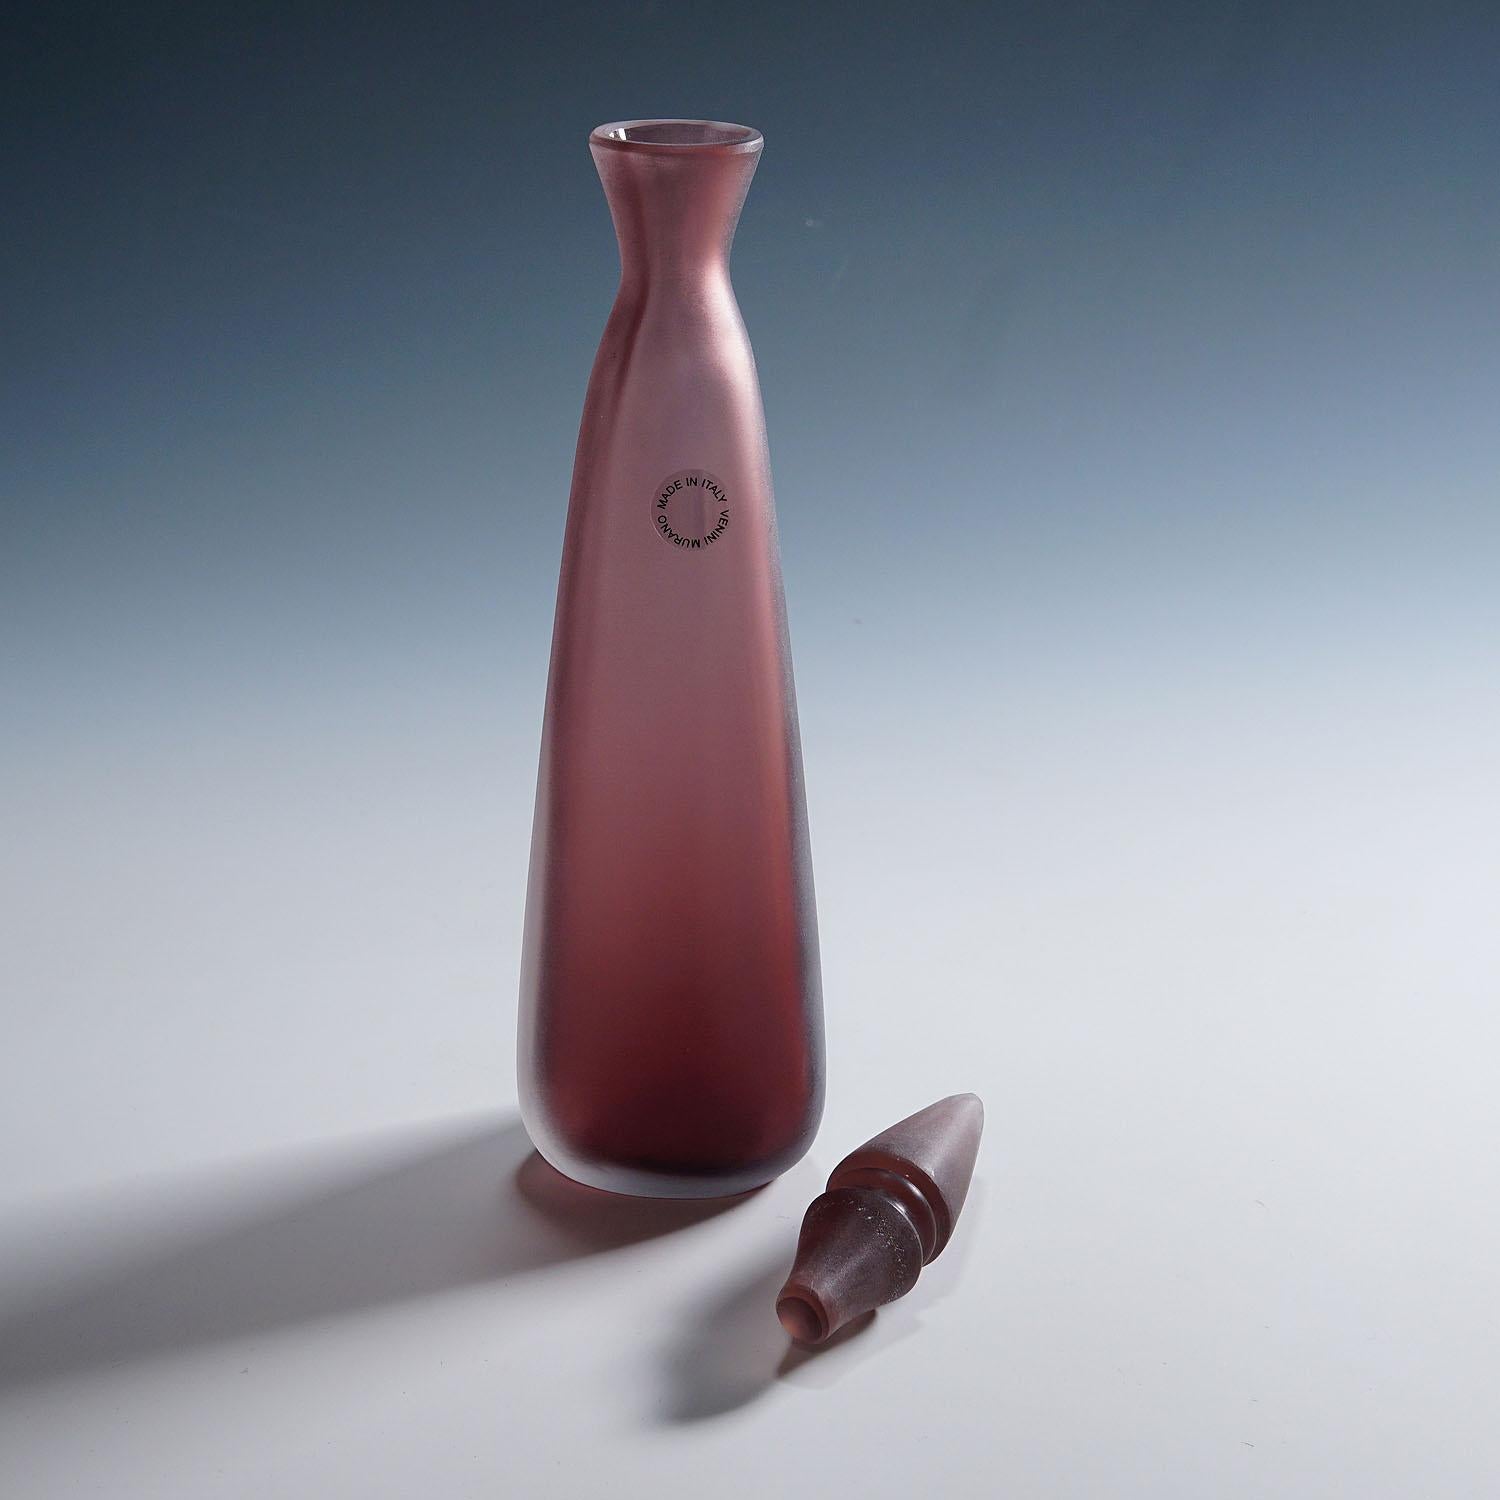 Art Glass Paolo Venini Inciso Glass Bottle Manufactured by Venini 1990s For Sale